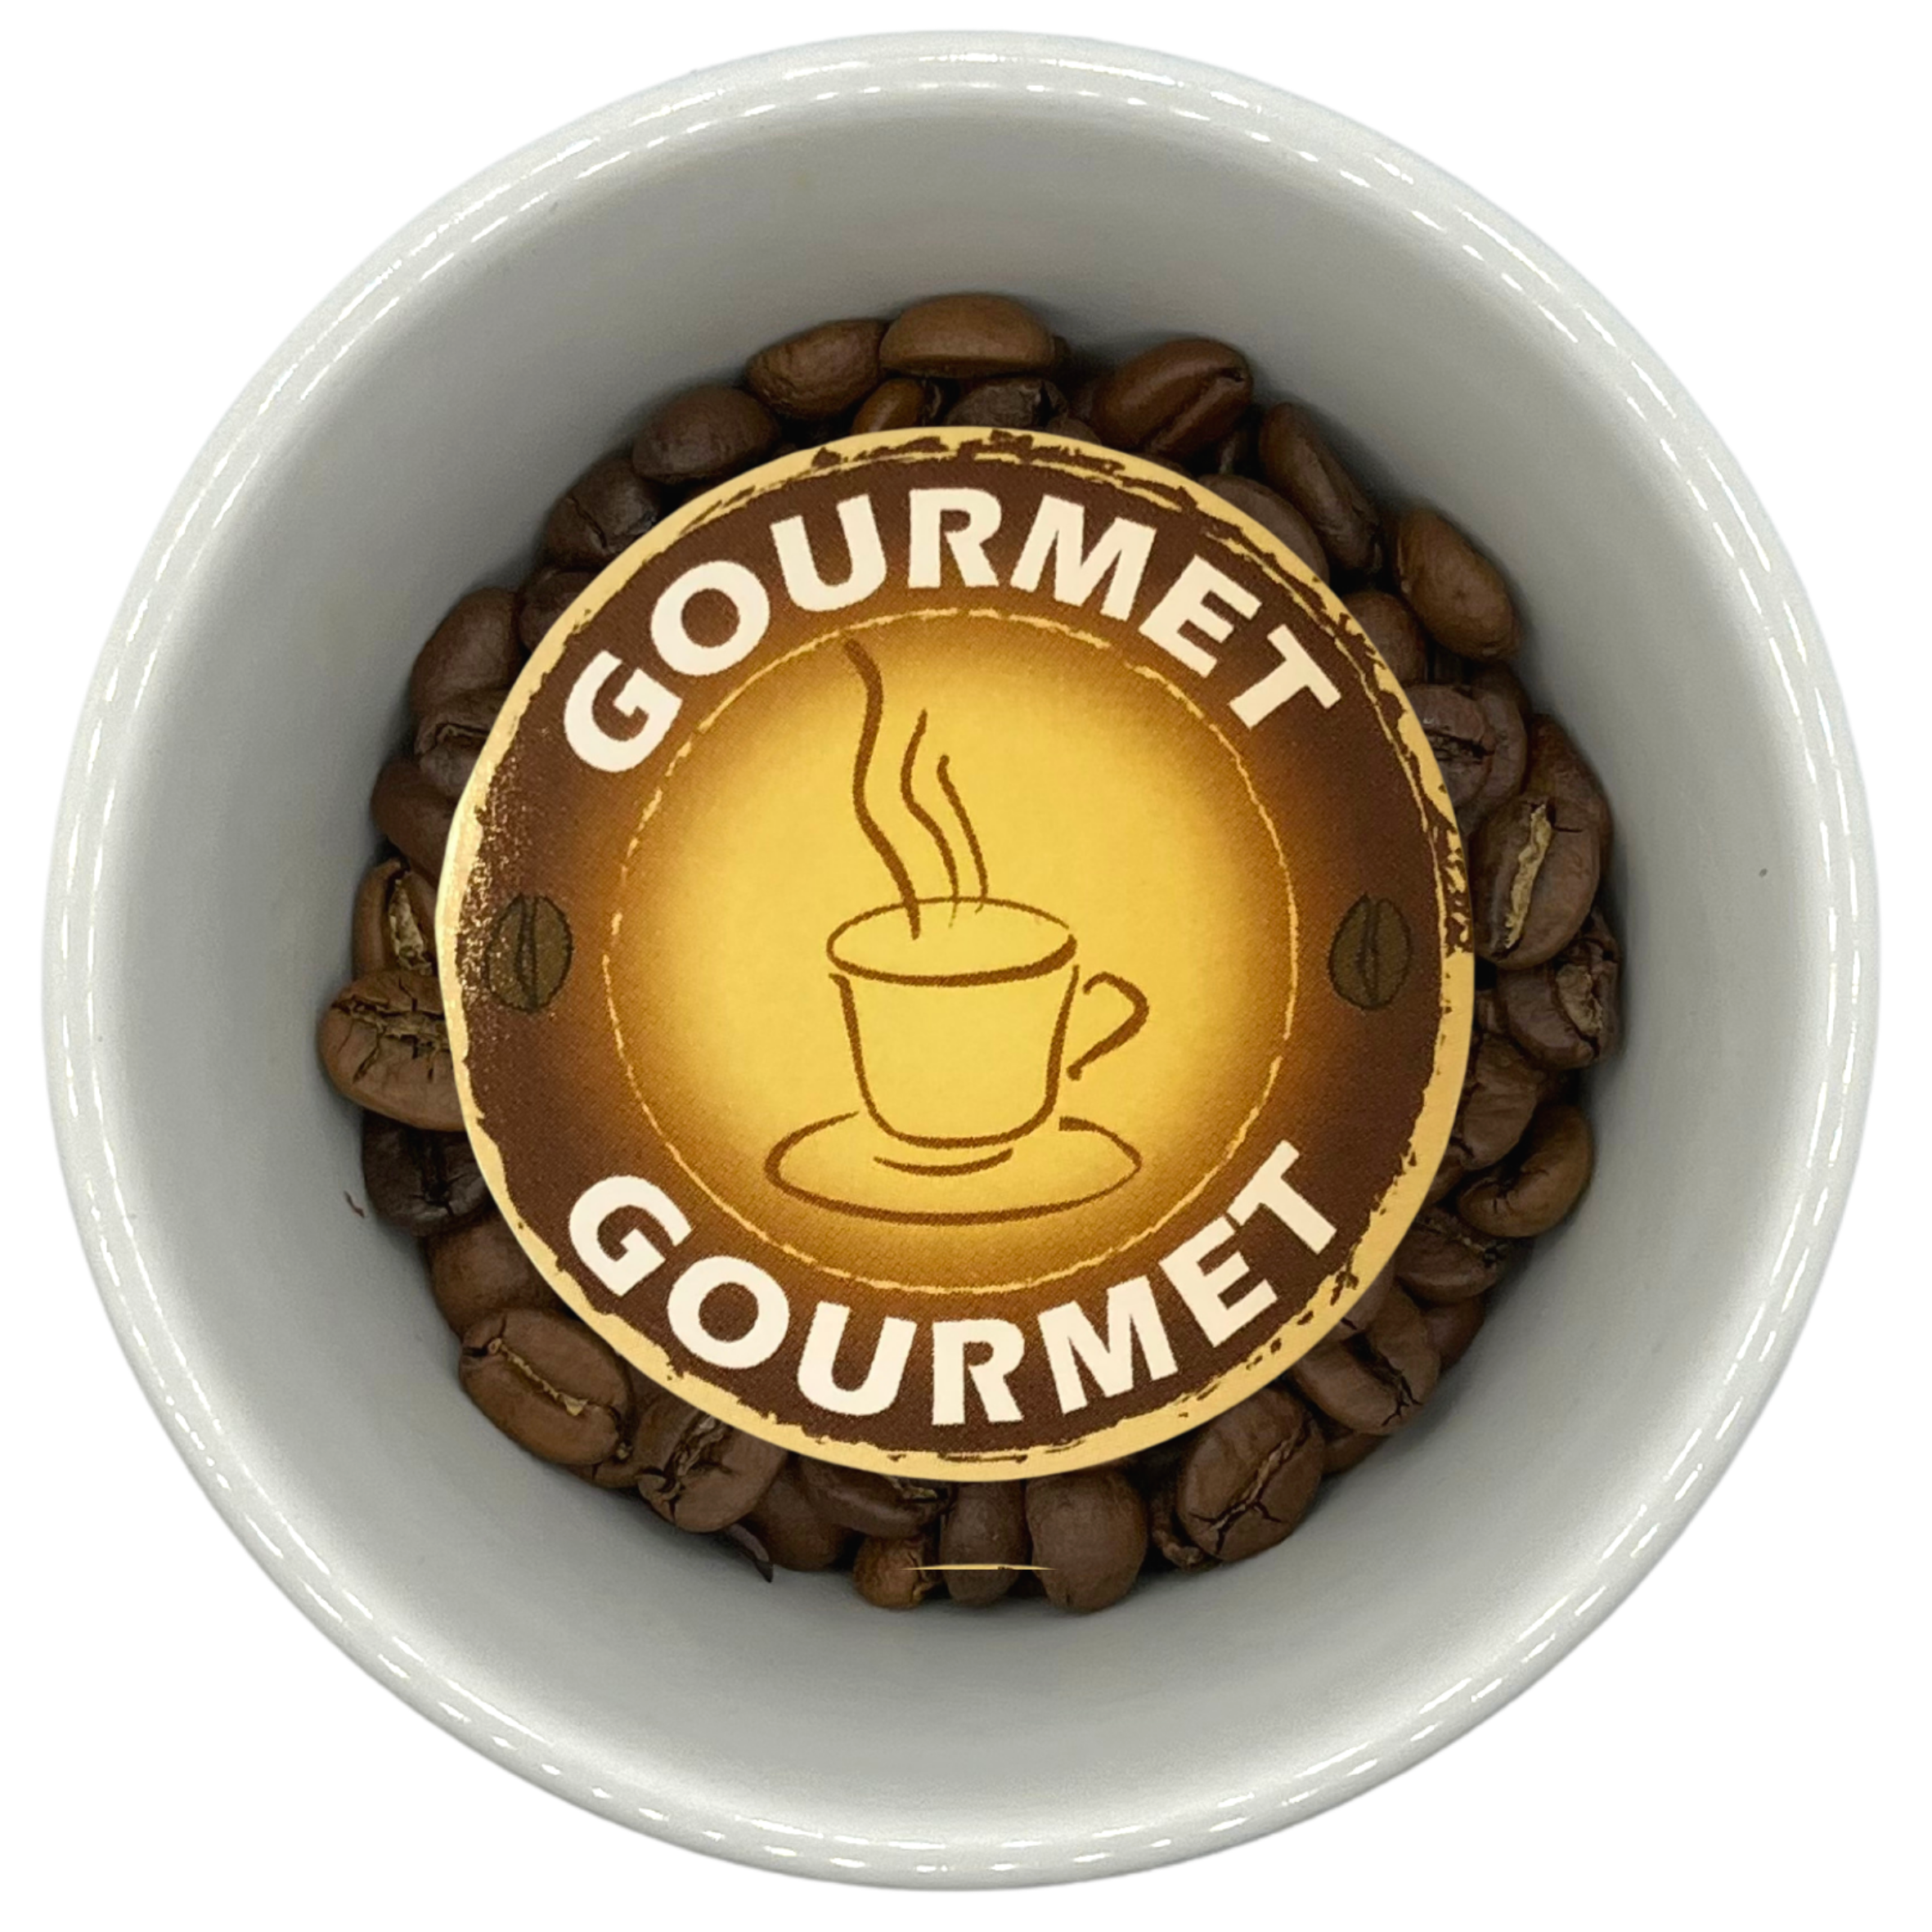 Café Gourmet Saveur Vanille